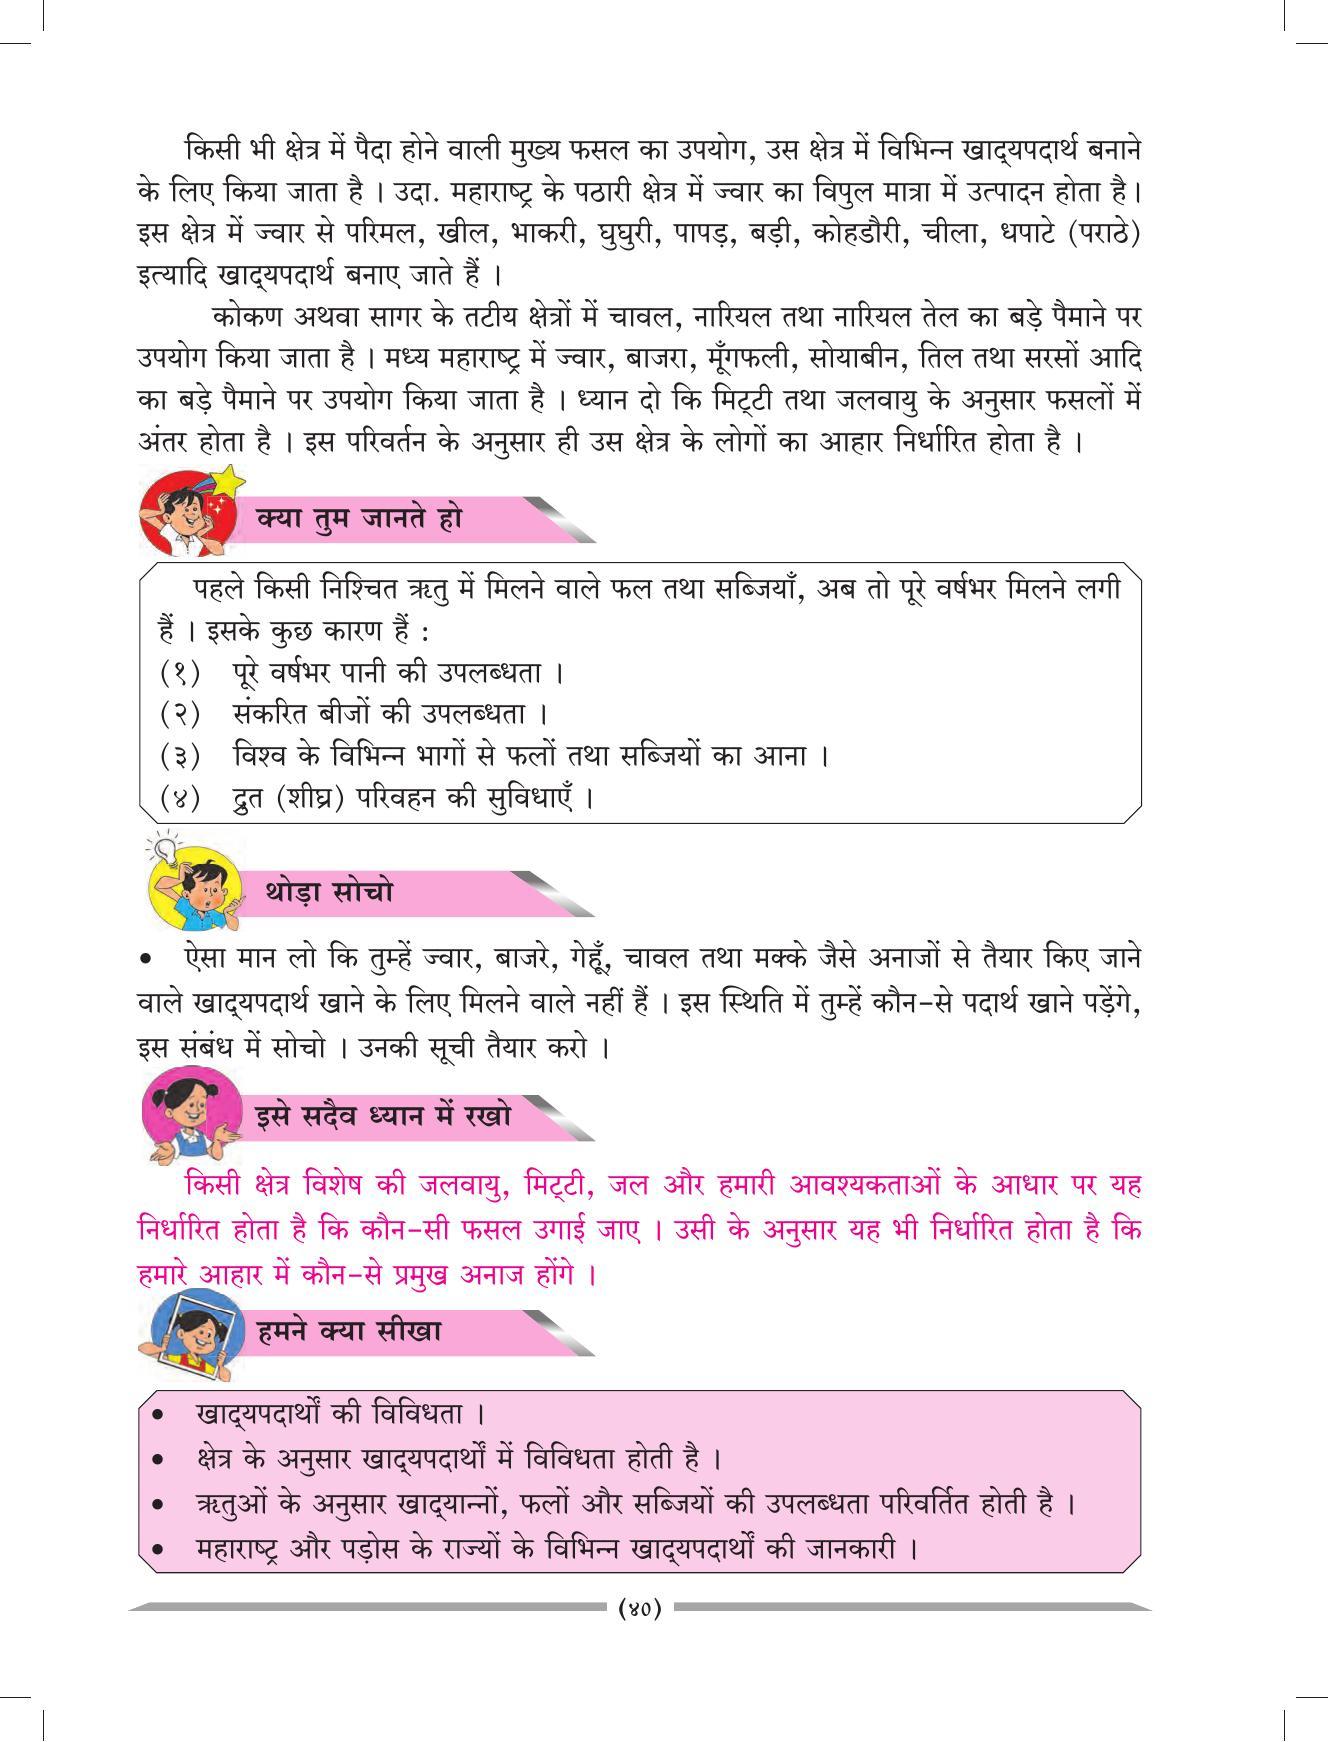 Maharashtra Board Class 4 EVS 1 (Hindi Medium) Textbook - Page 50